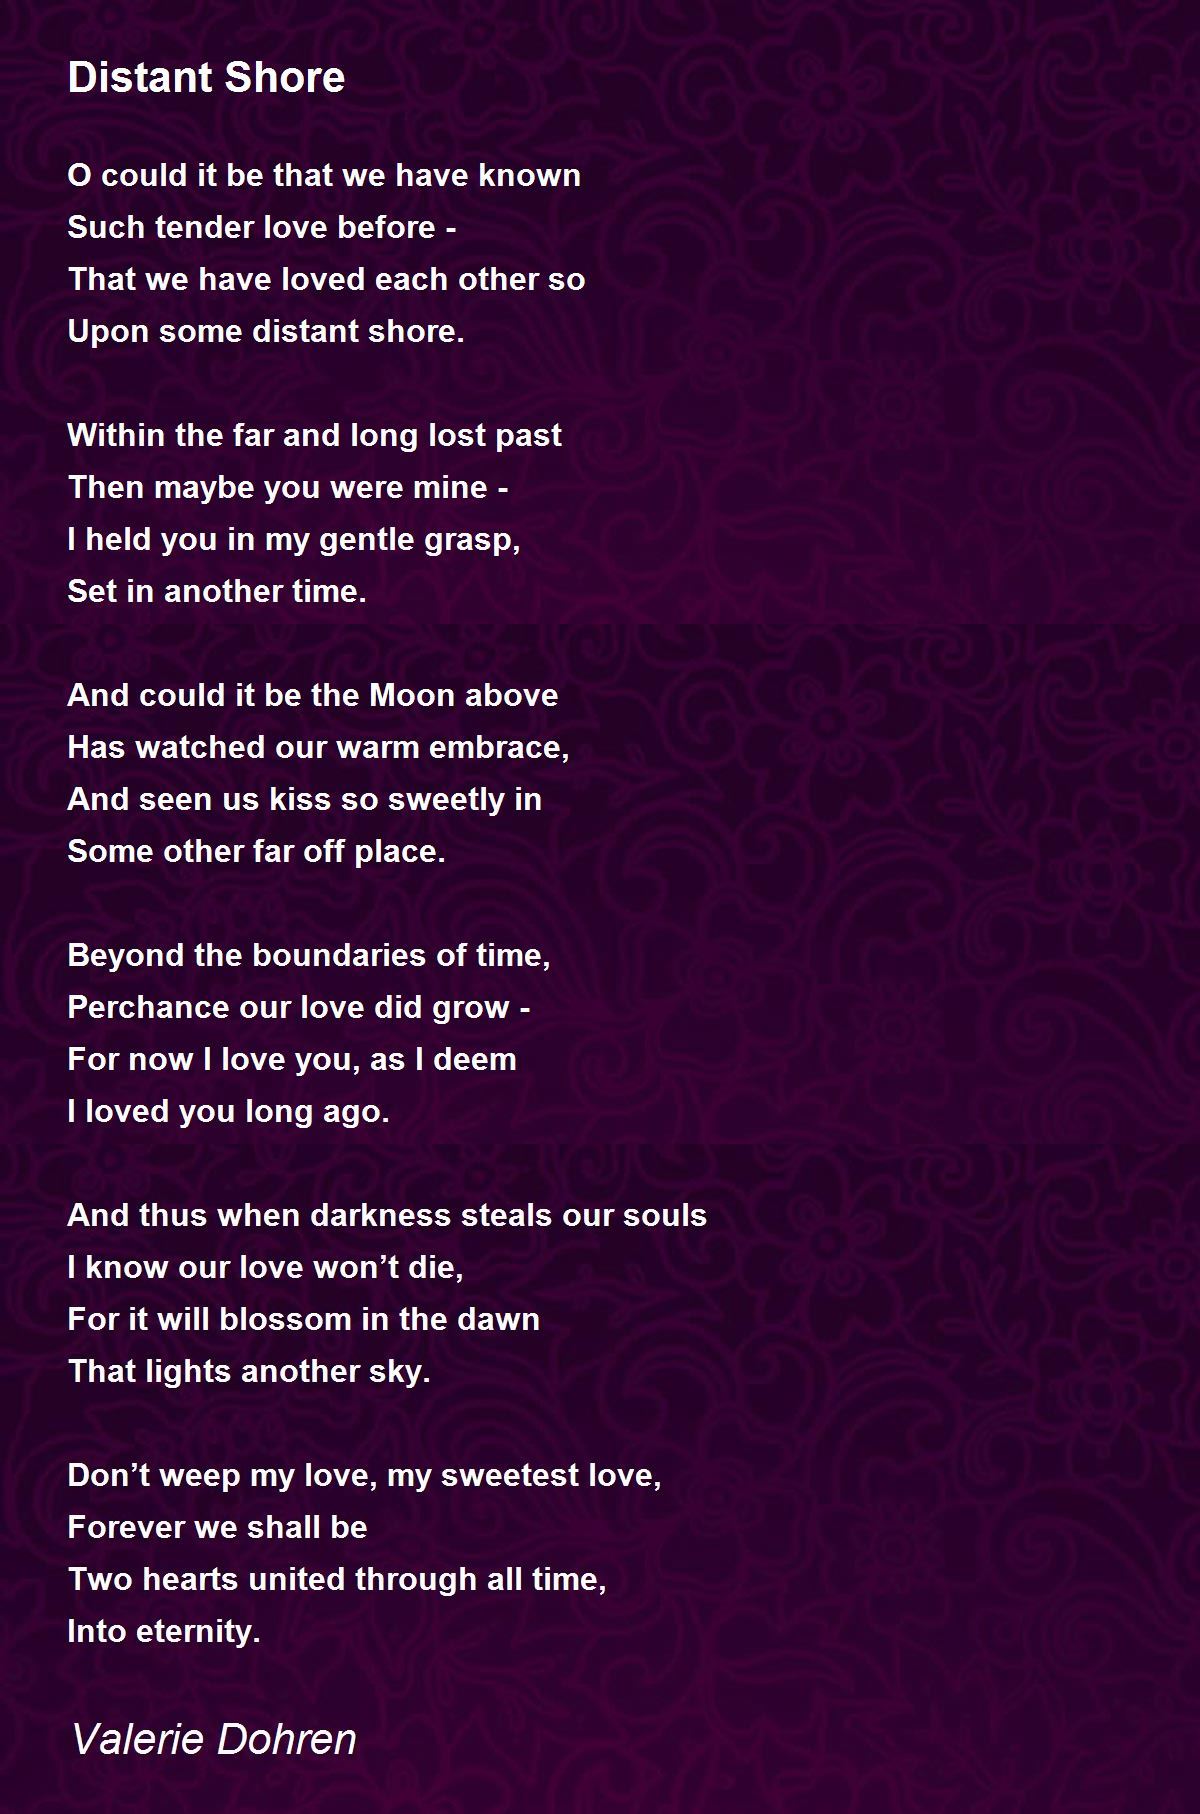 Distant Shore Poem by Valerie Dohren - Poem Hunter